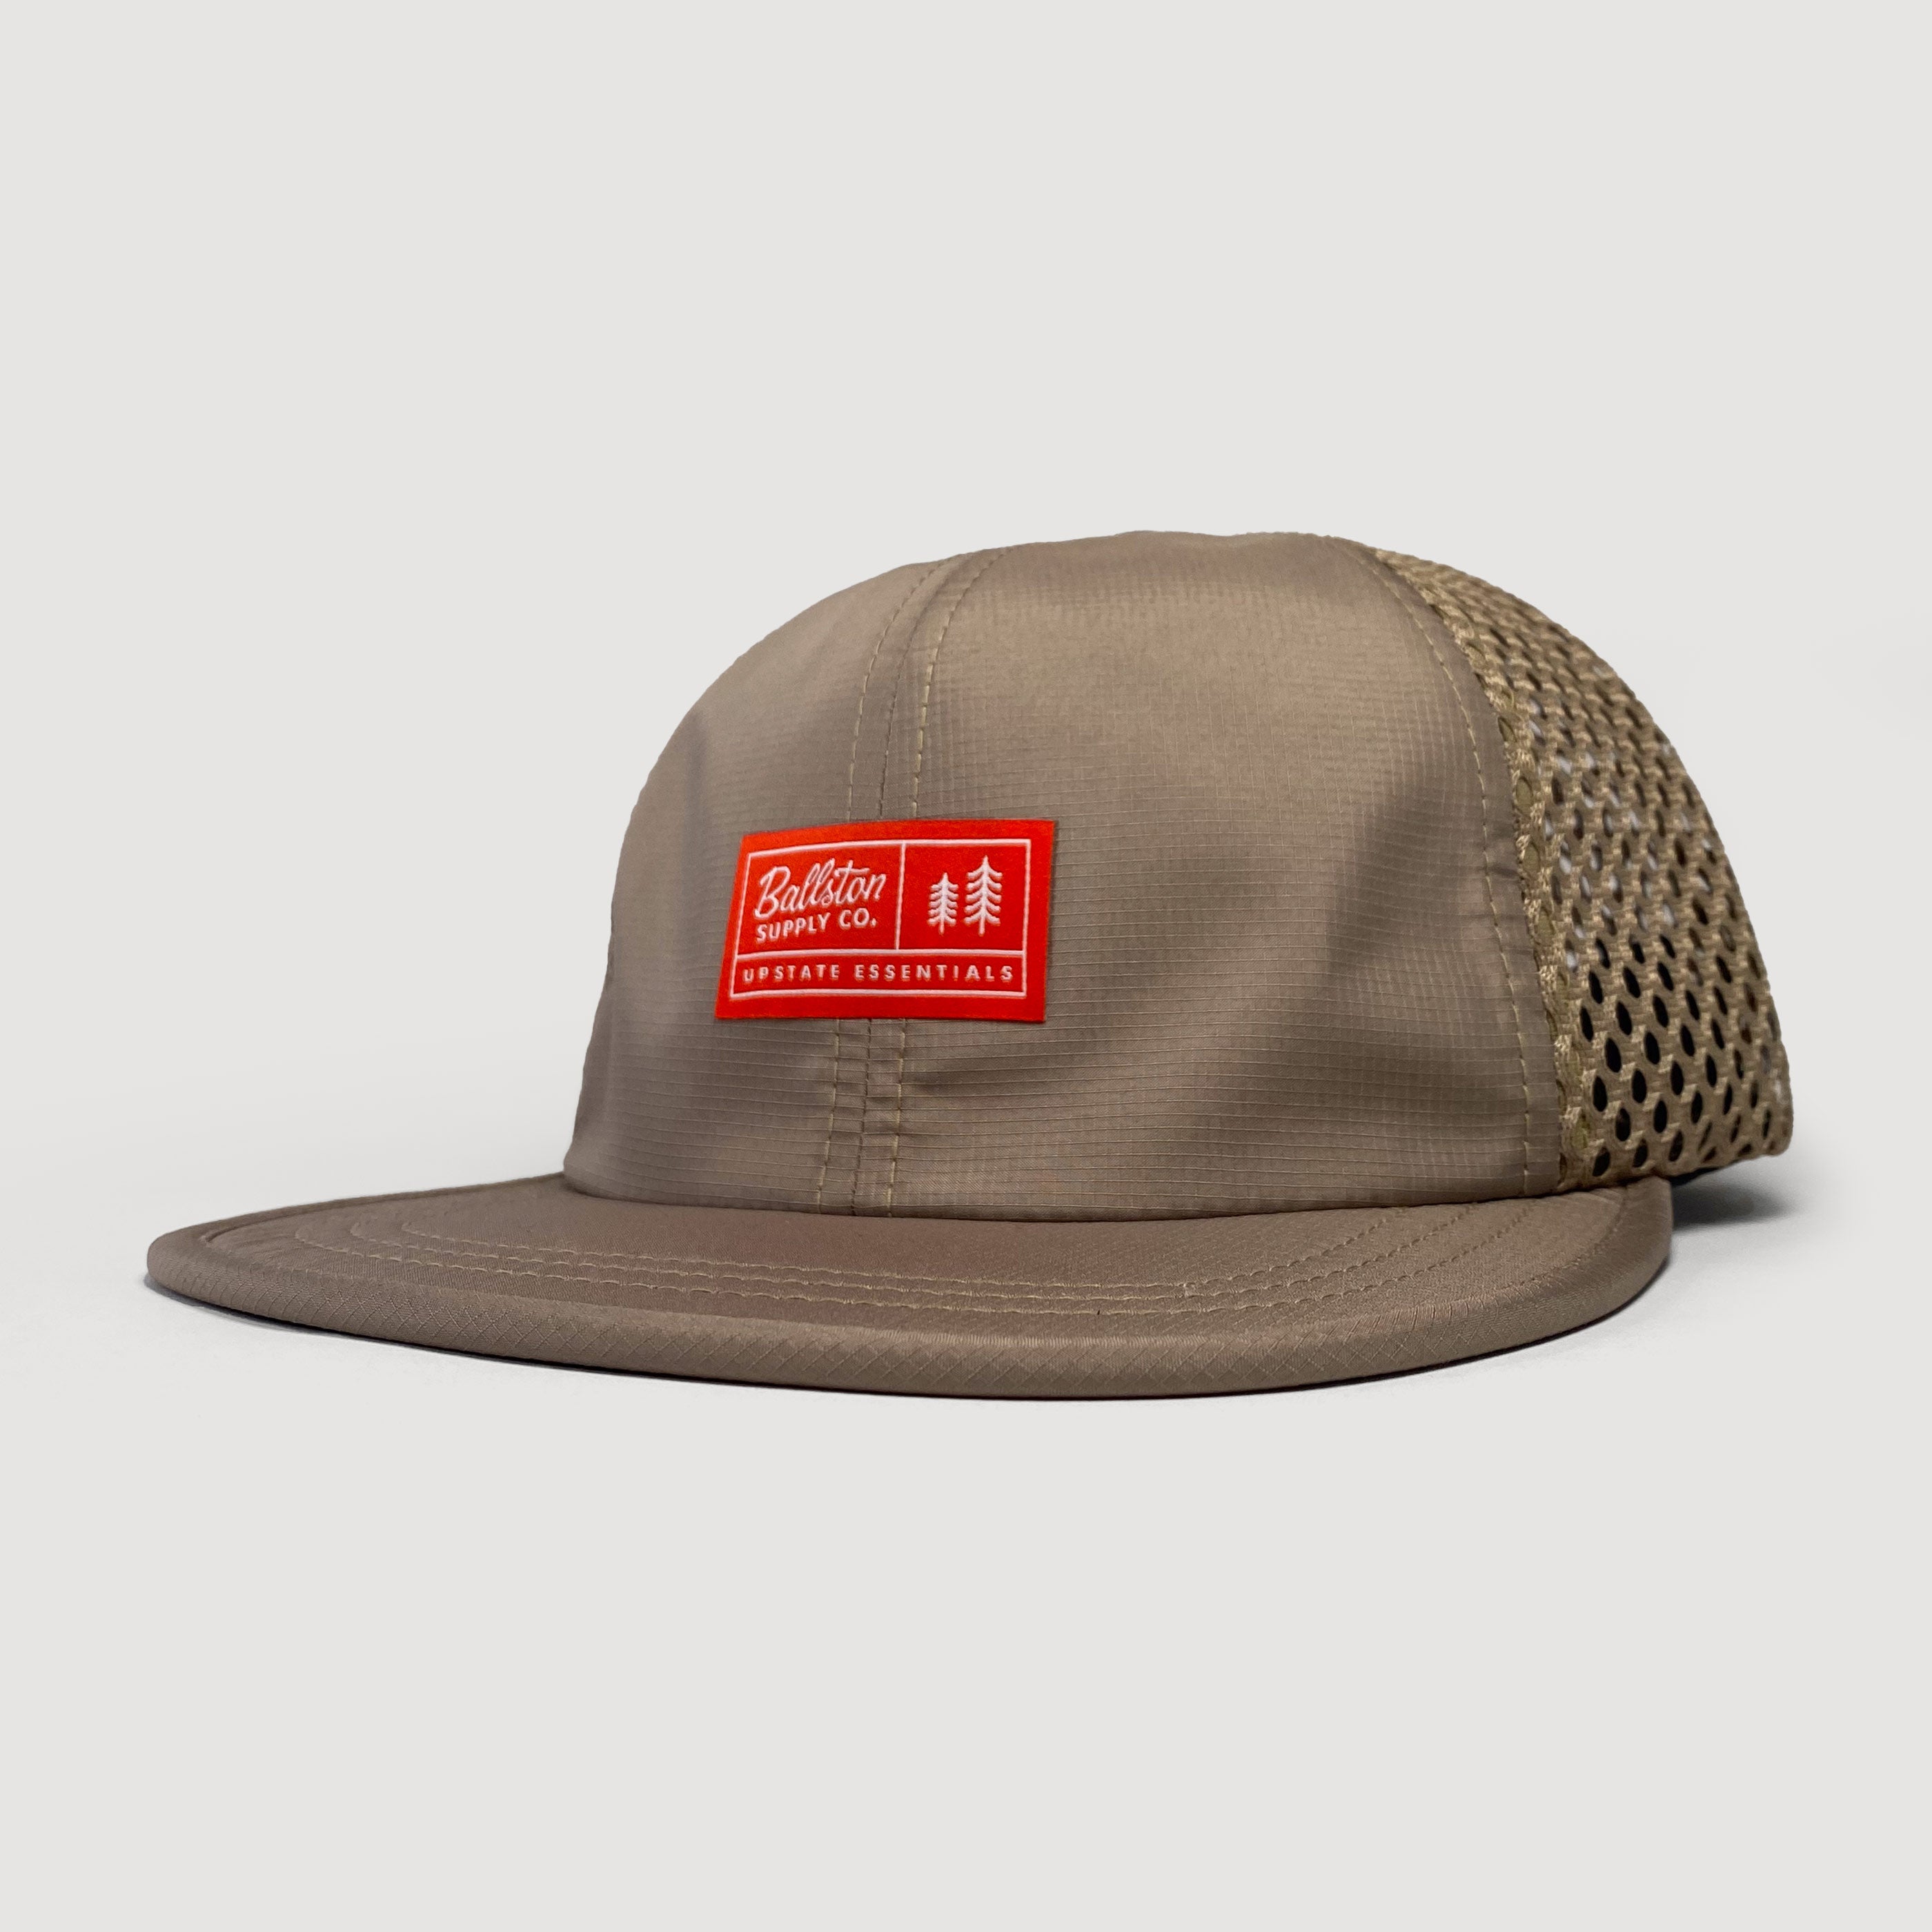 Hiker Hat